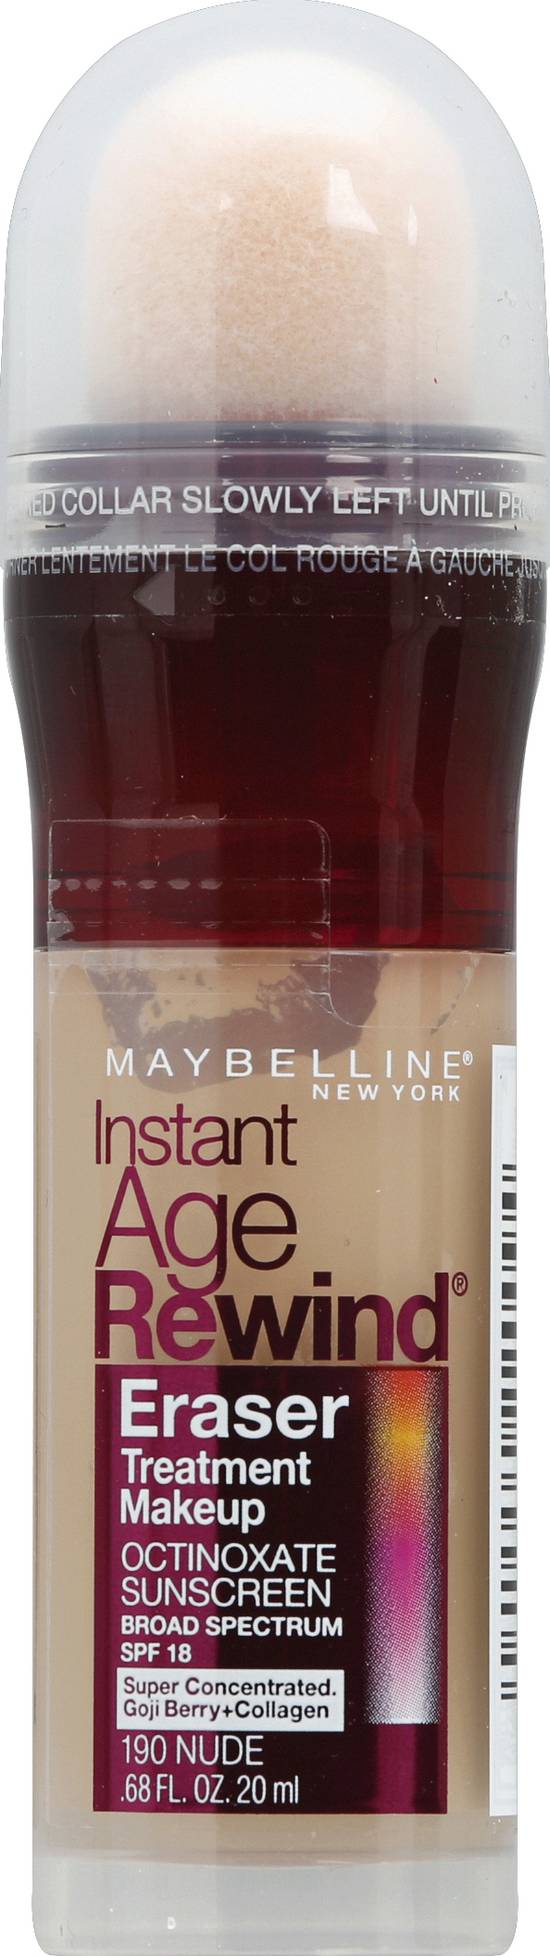 Maybelline Instant Age Rewind Eraser Treatment Makeup Nude 190